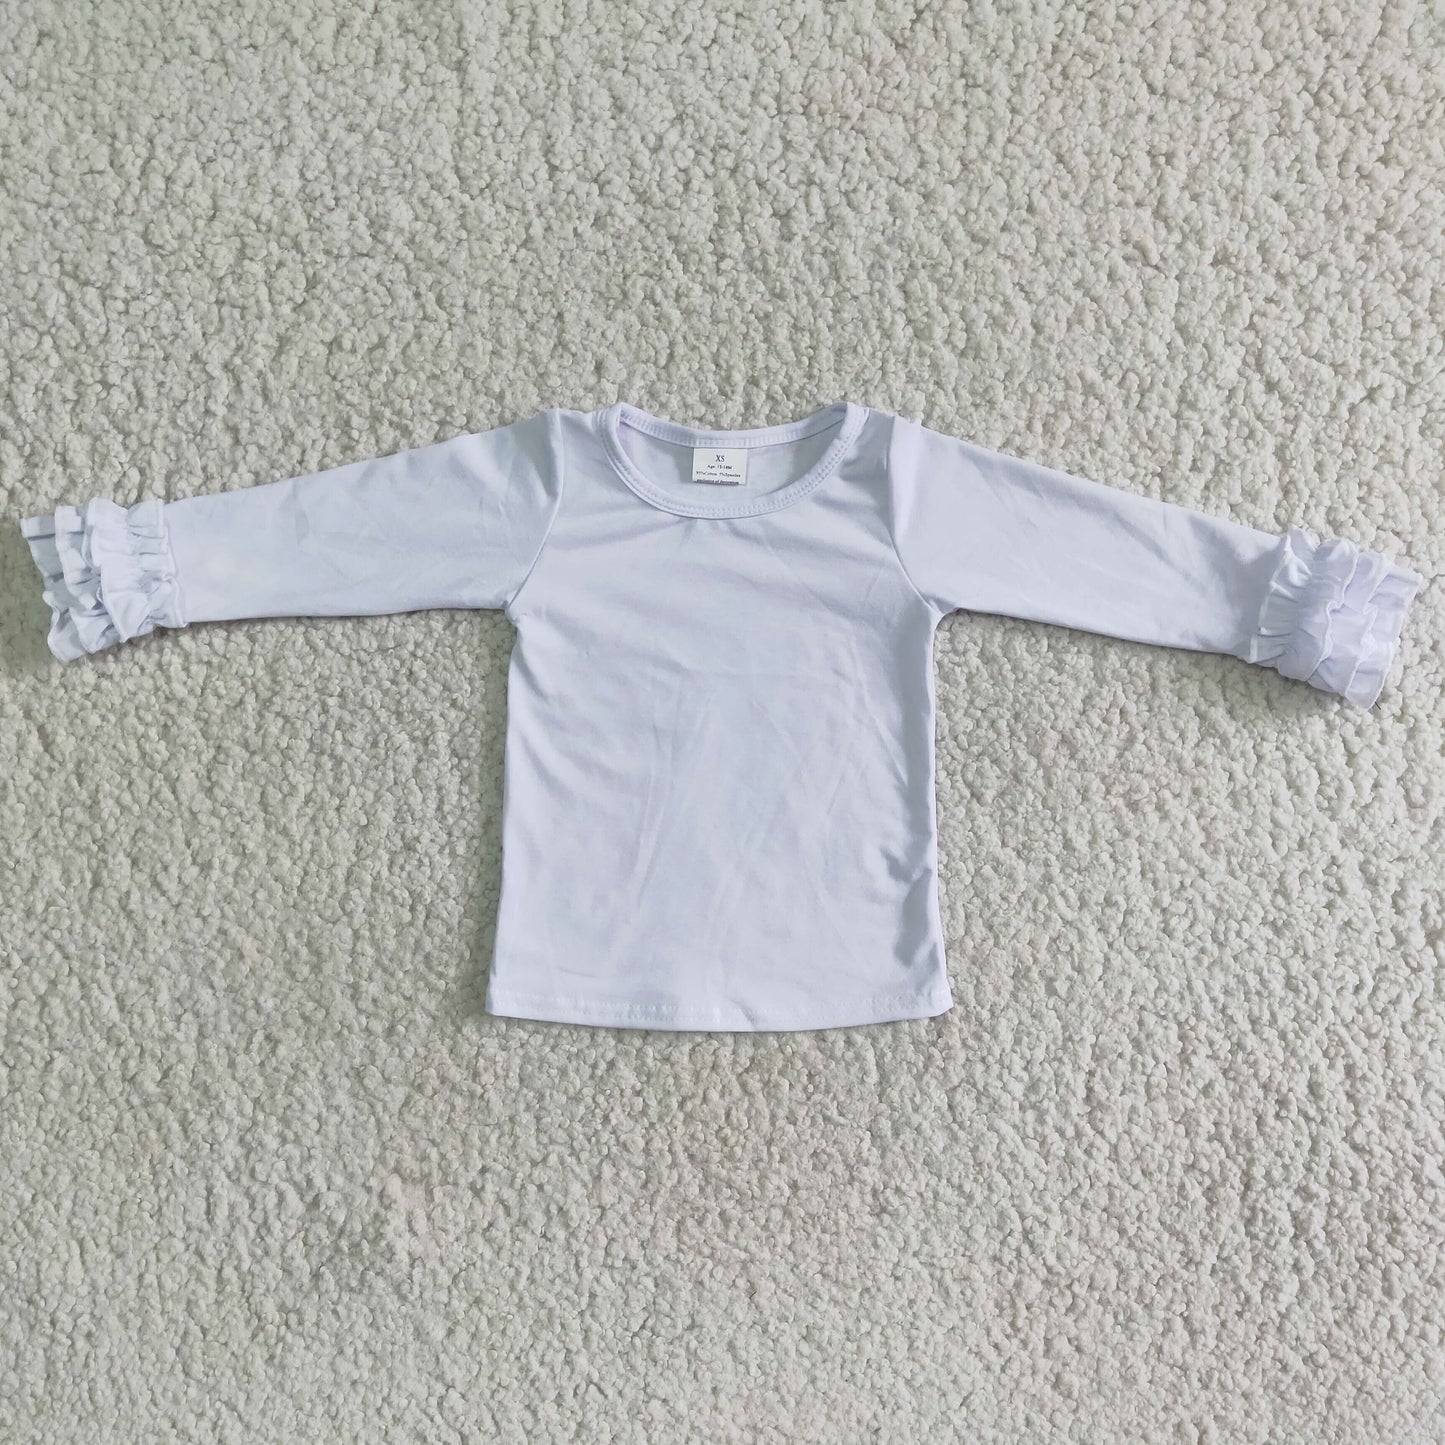 Cotton White Ruffle Shirt